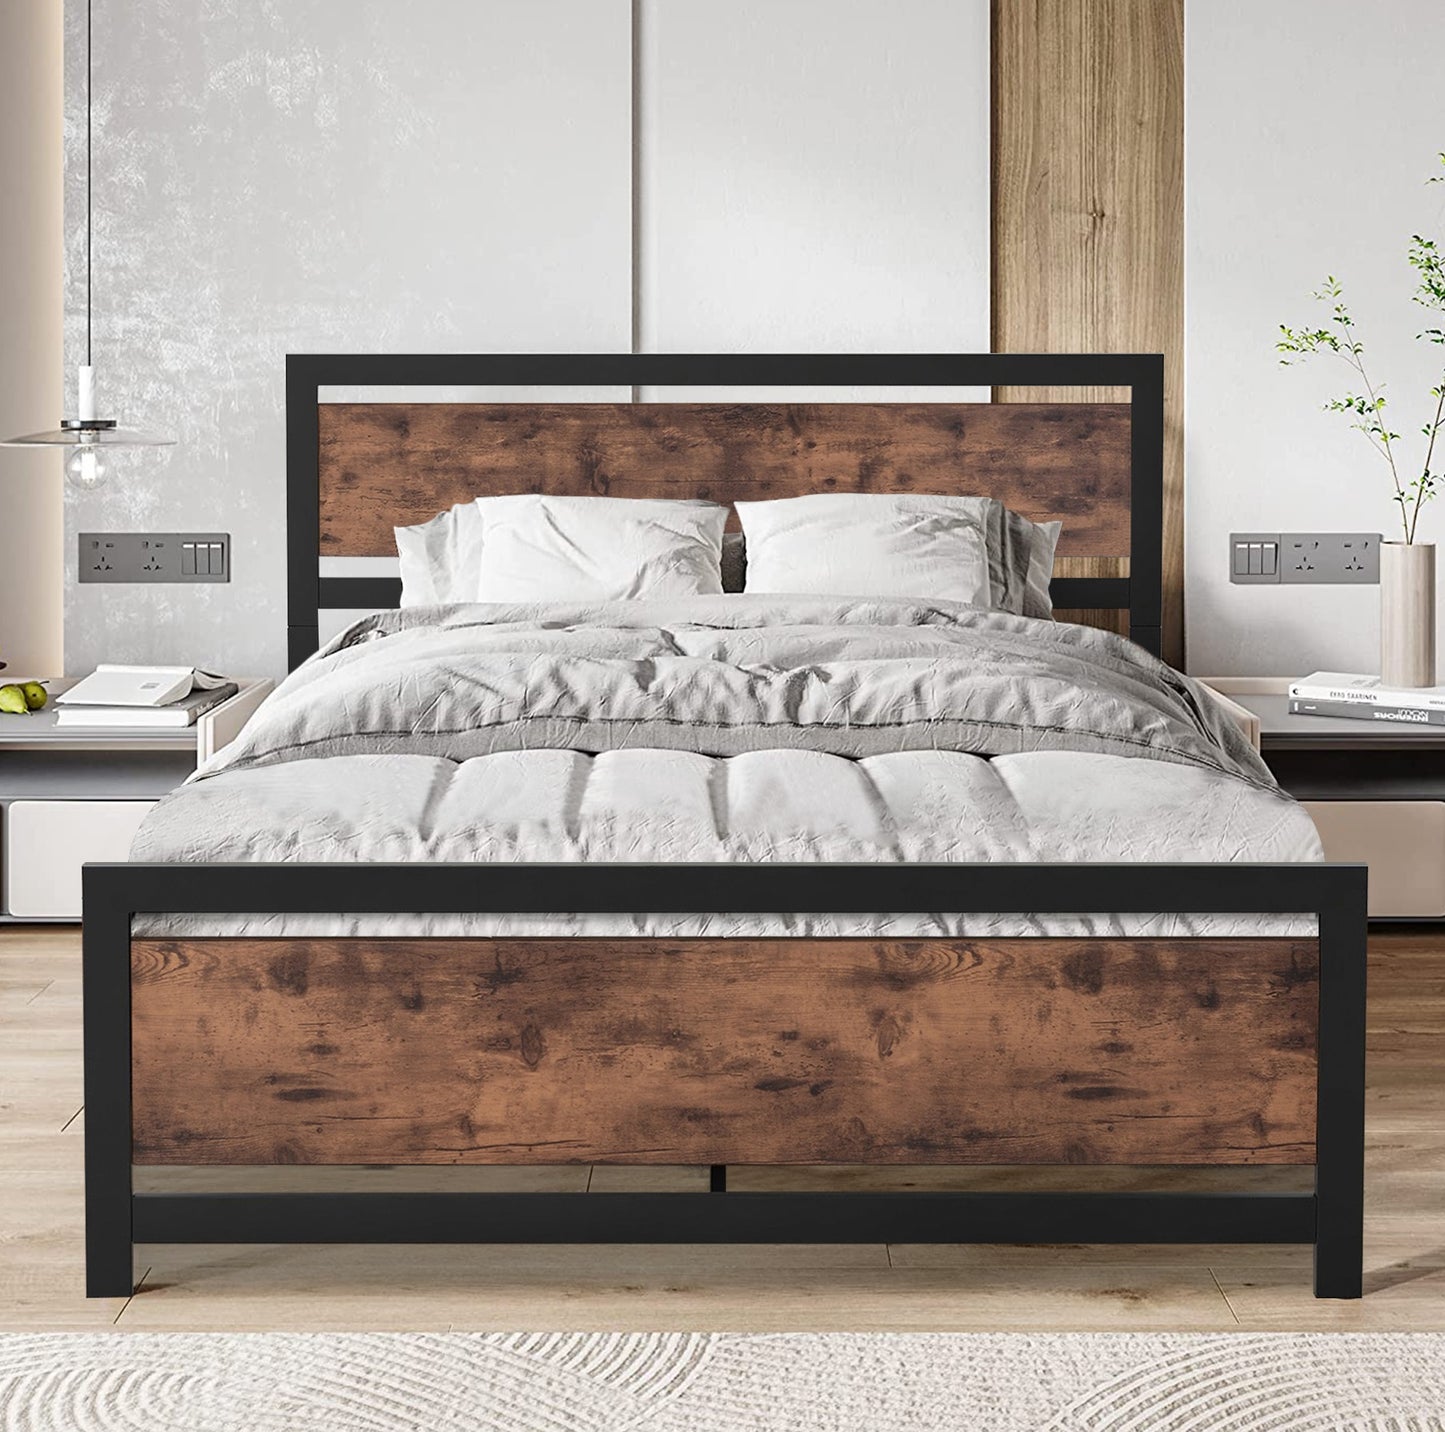 Full Size Bed Frame for Teens Kids, Industrial Platform Bed Frame with Sturdy Metal Slats, No Box Spring Needed, Black, LJ919